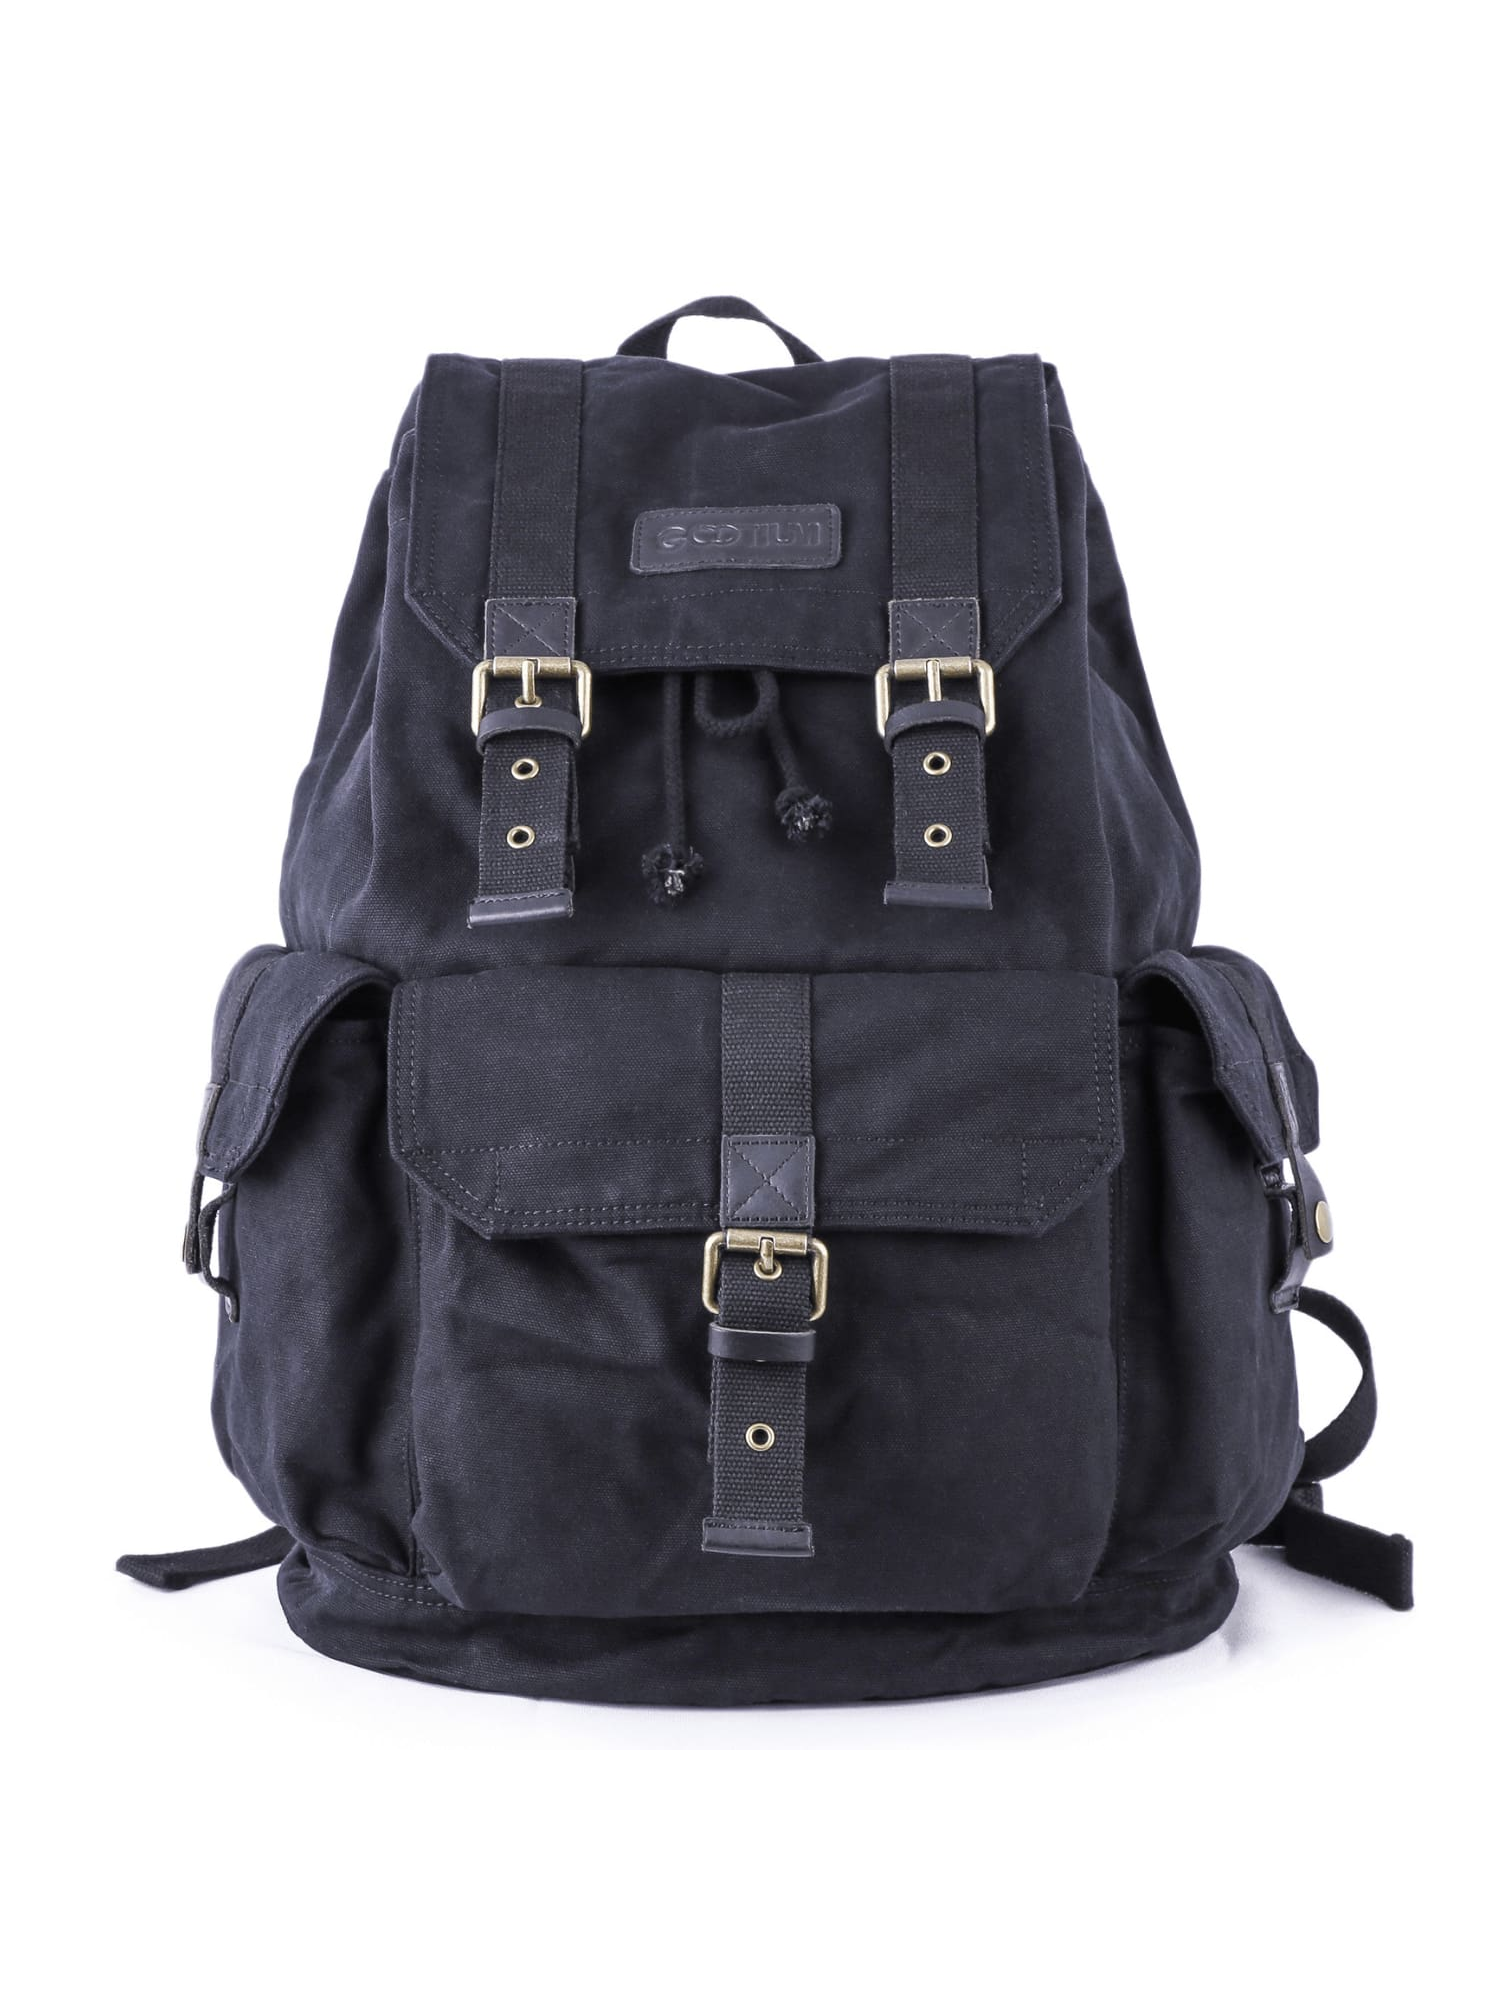 Рюкзак Gootium Canvas 21101, черный new slr camera backpack bag waterproof canvas